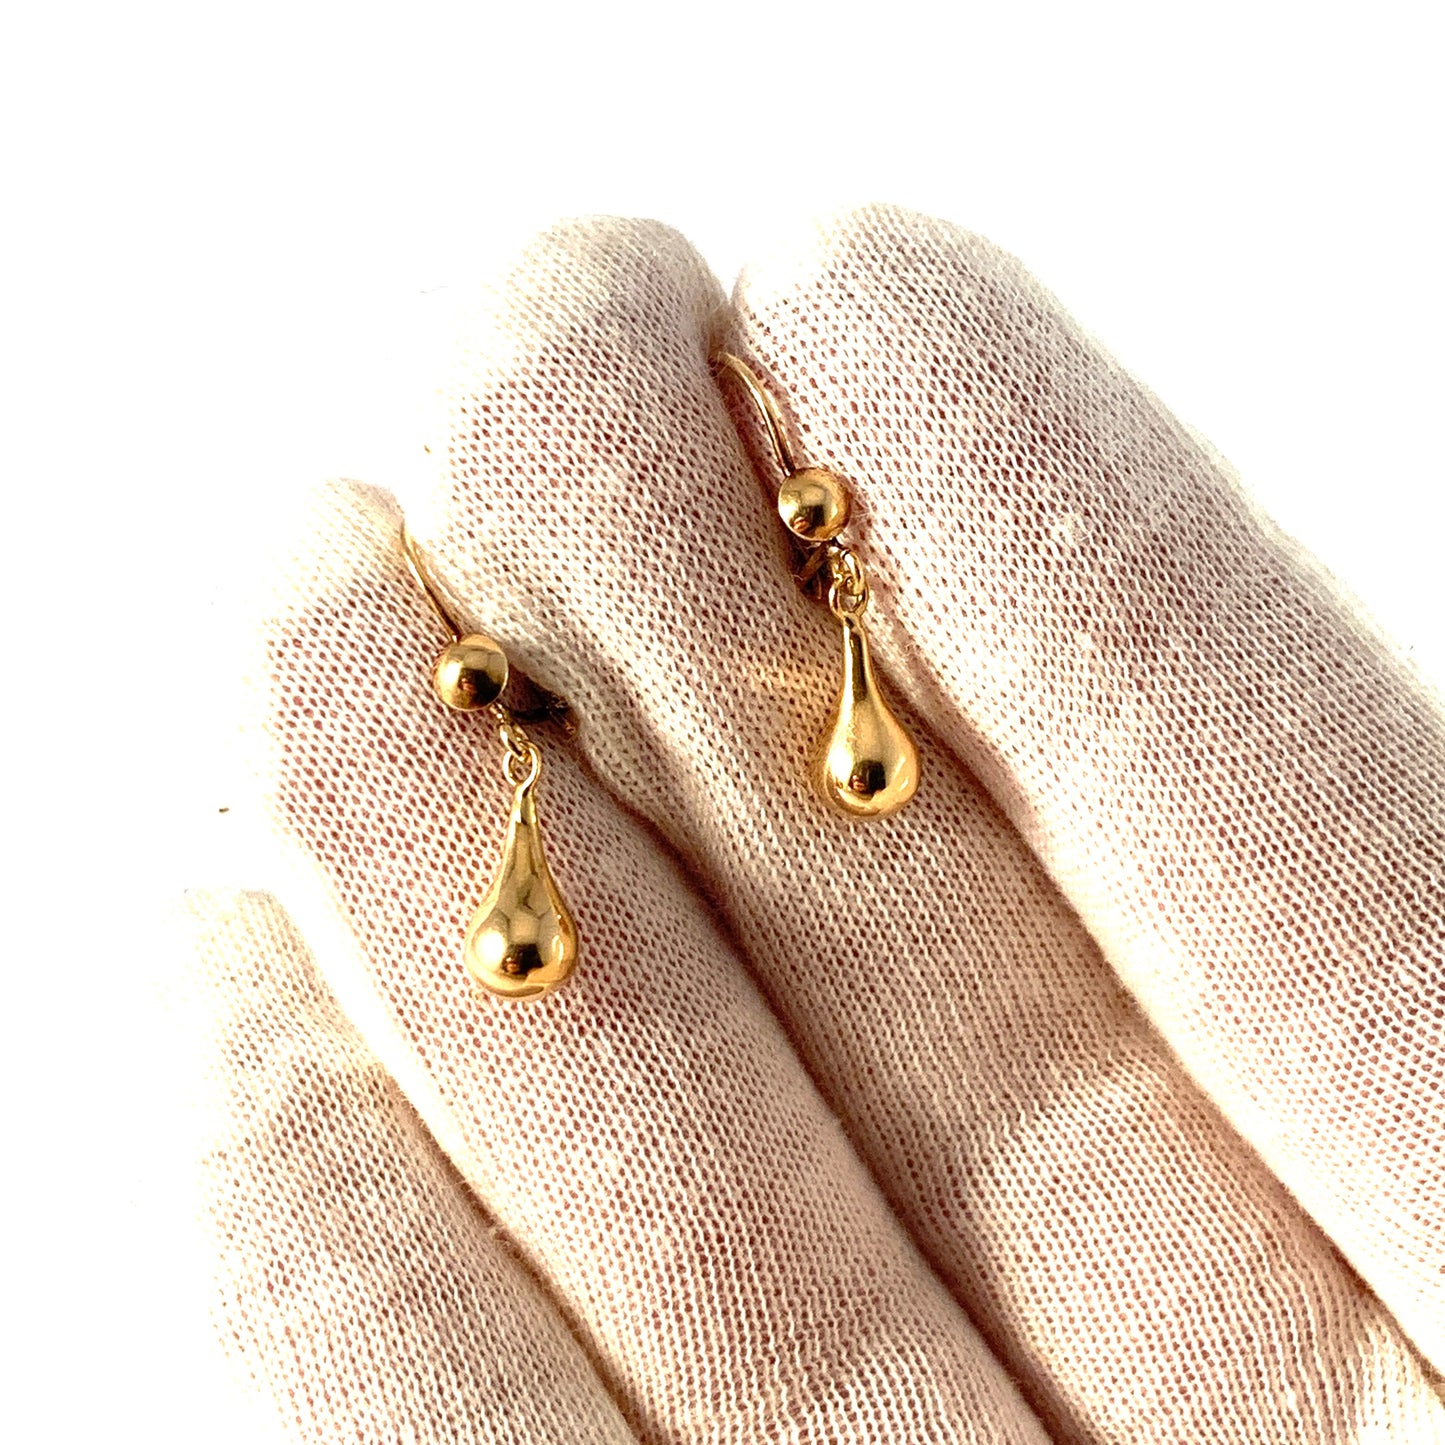 Vintage 14k Gold Drop Earrings.